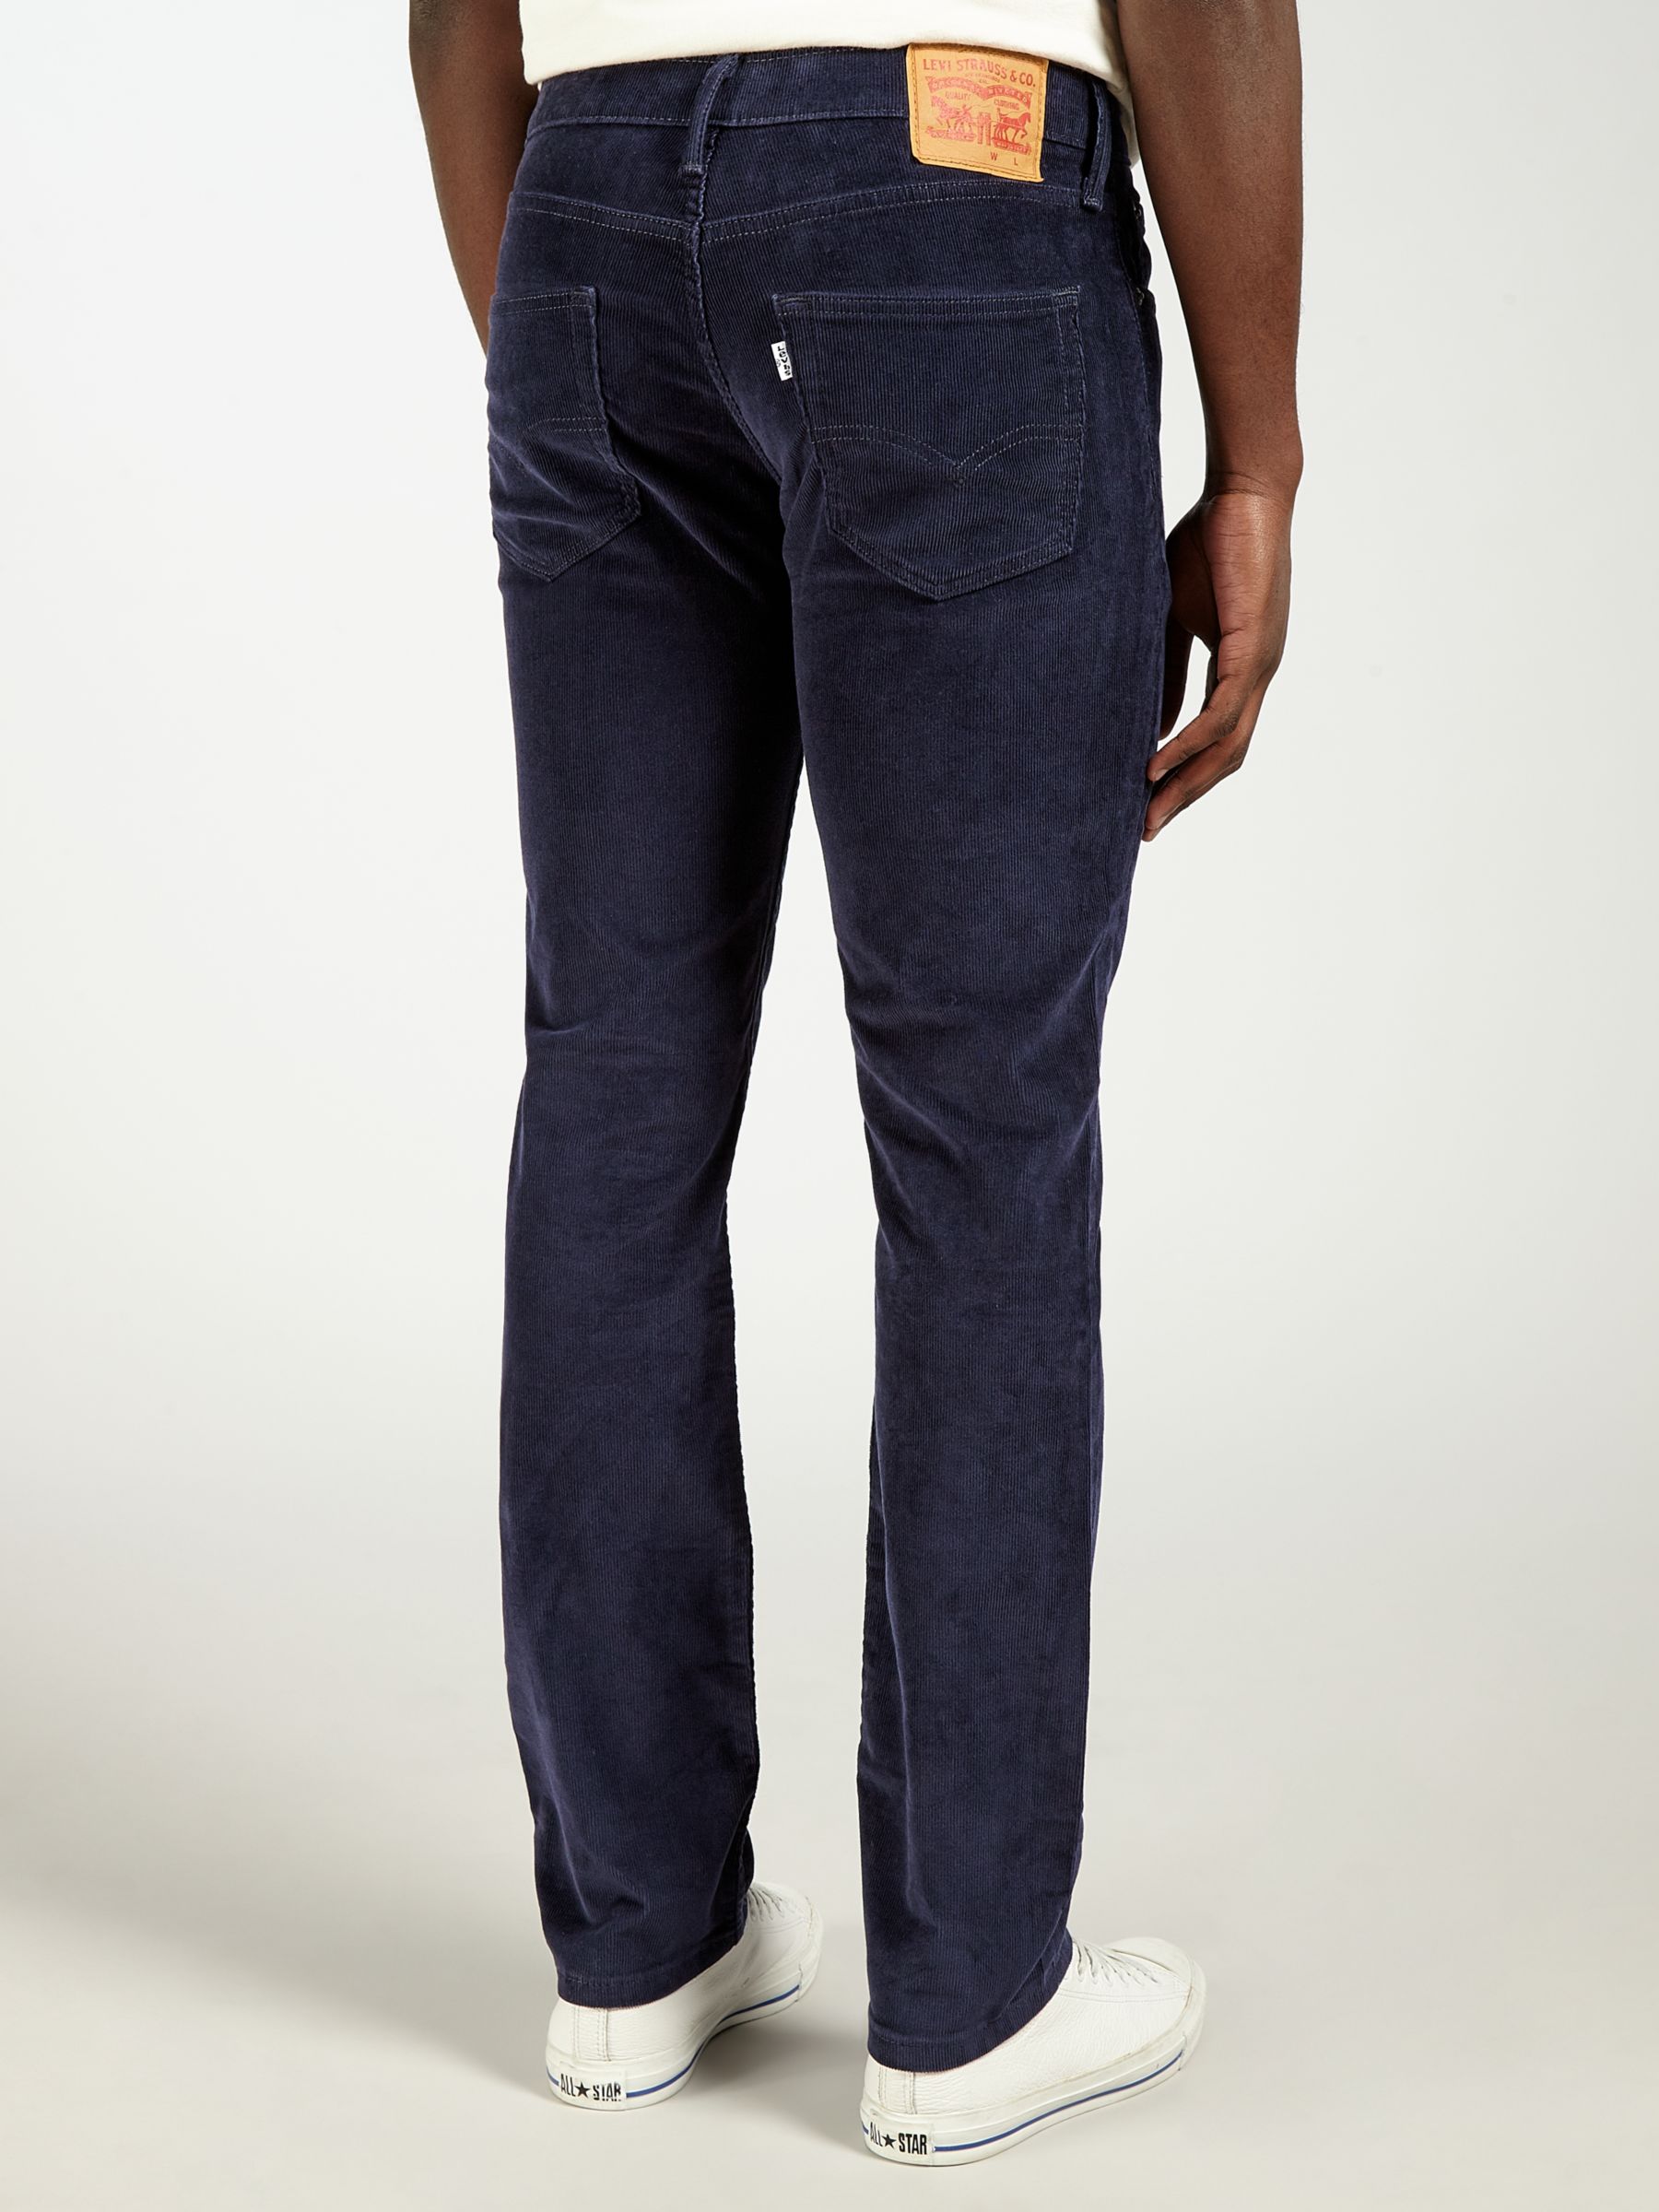 levi's 511 corduroy jeans